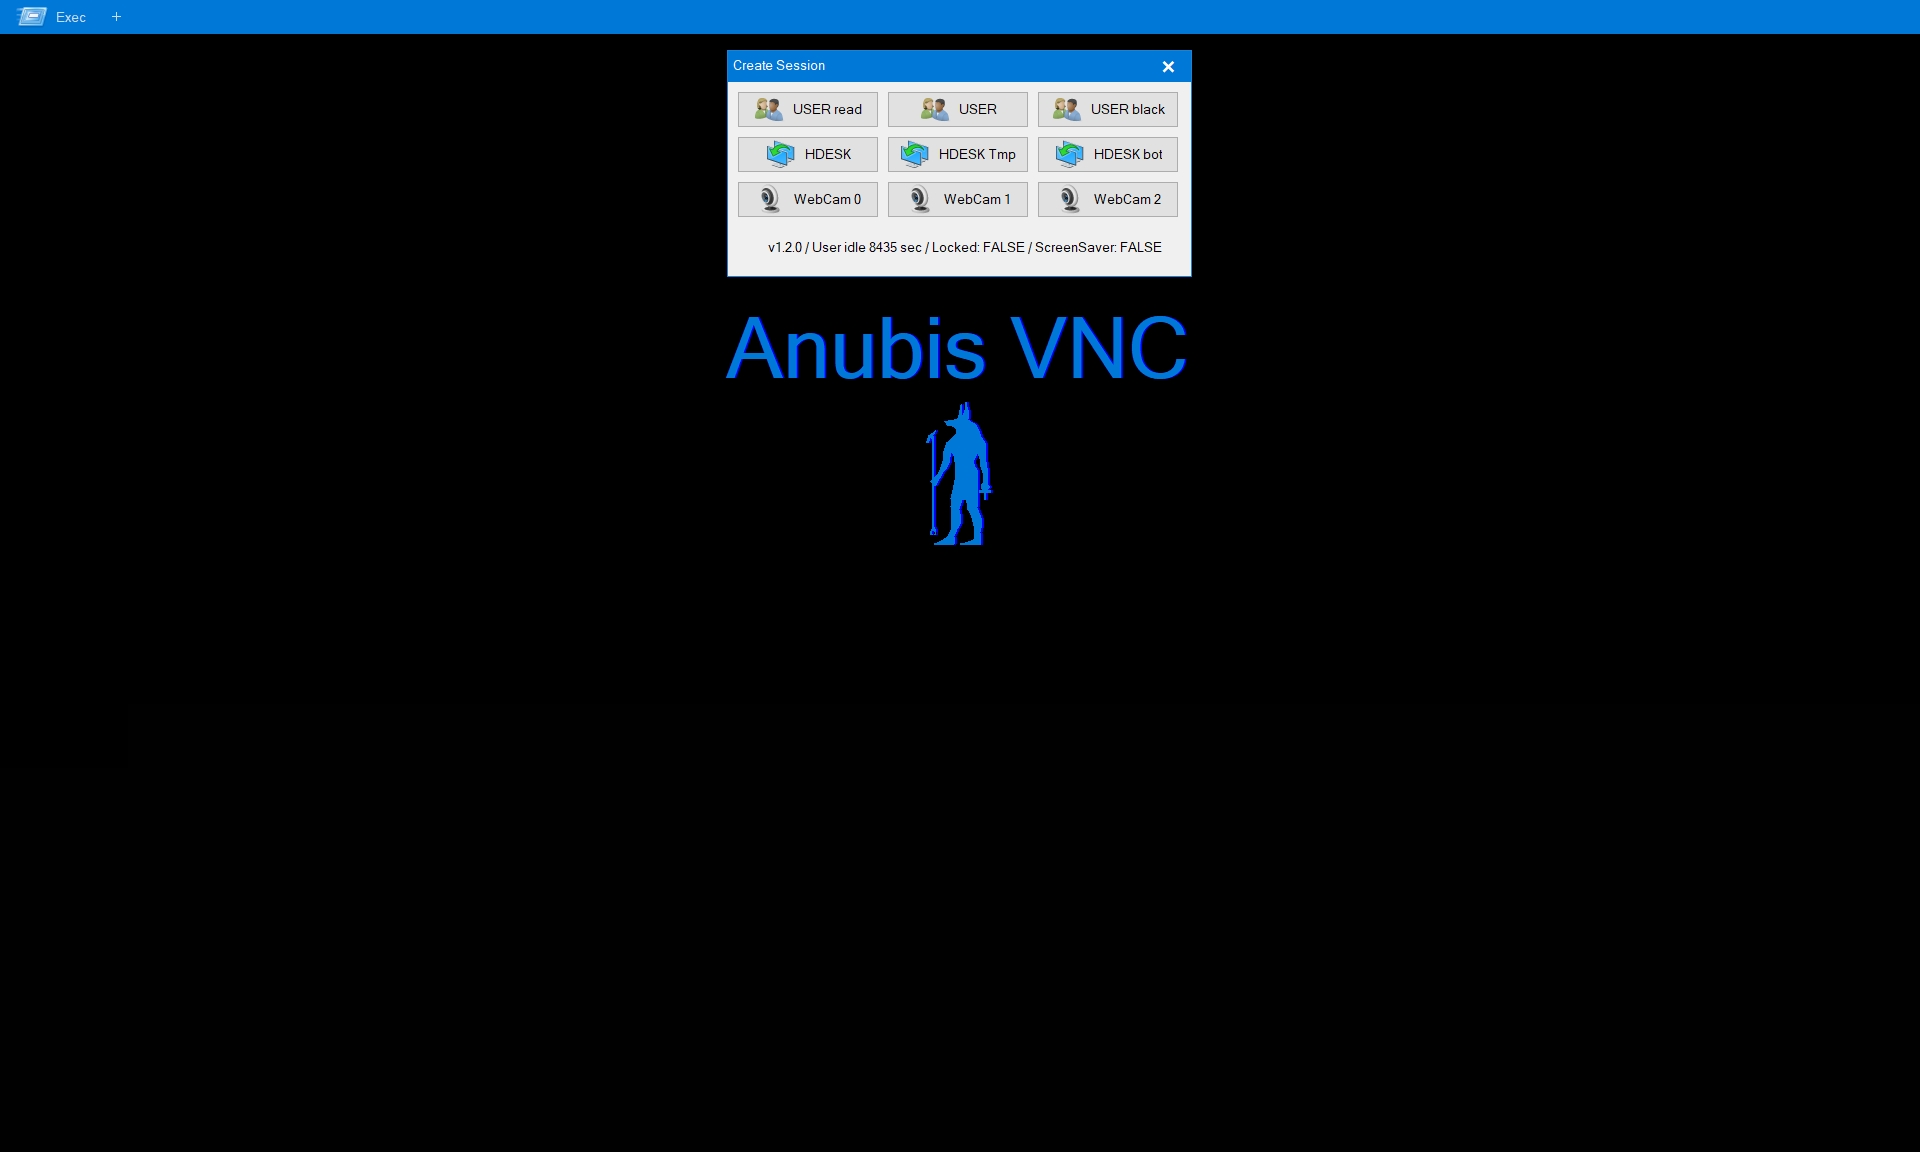 The Anubis VNC interface.